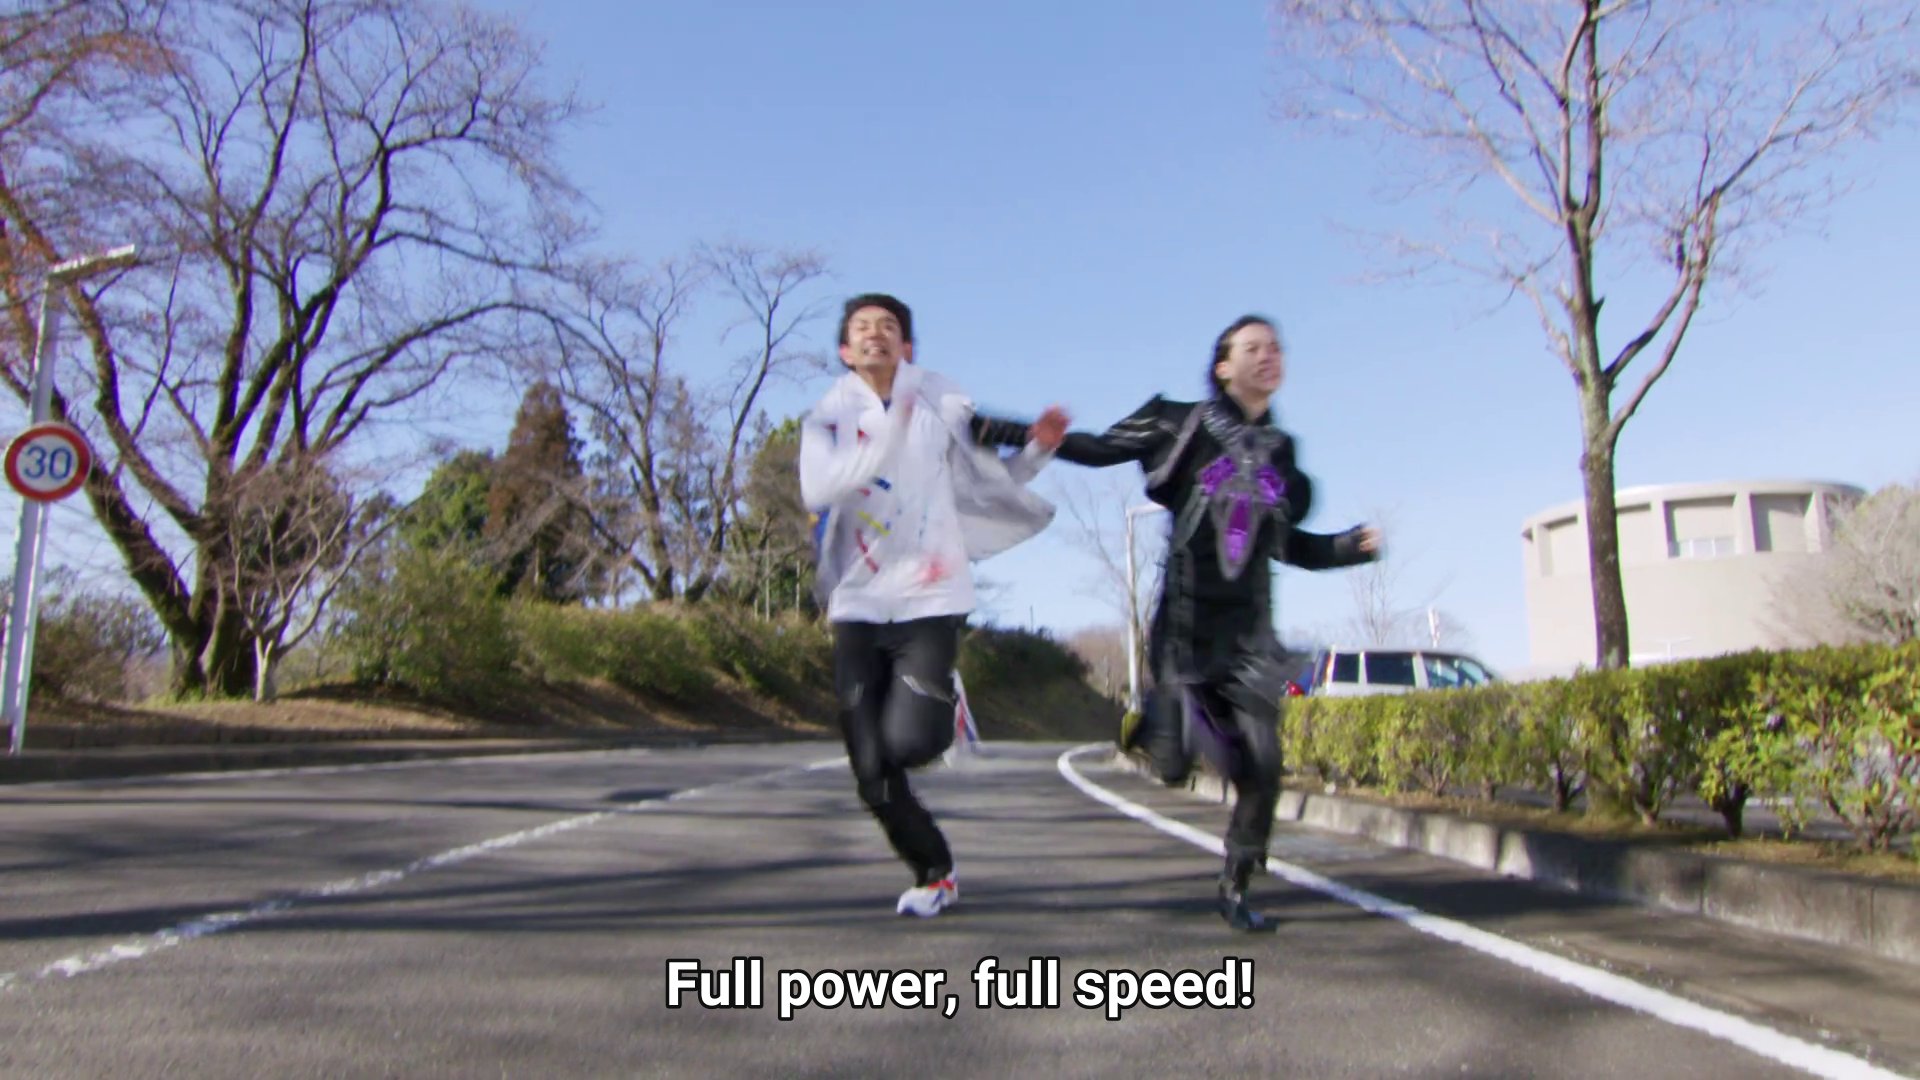 Stacey and Kaito racing.  Kaito: Full power, full speed!